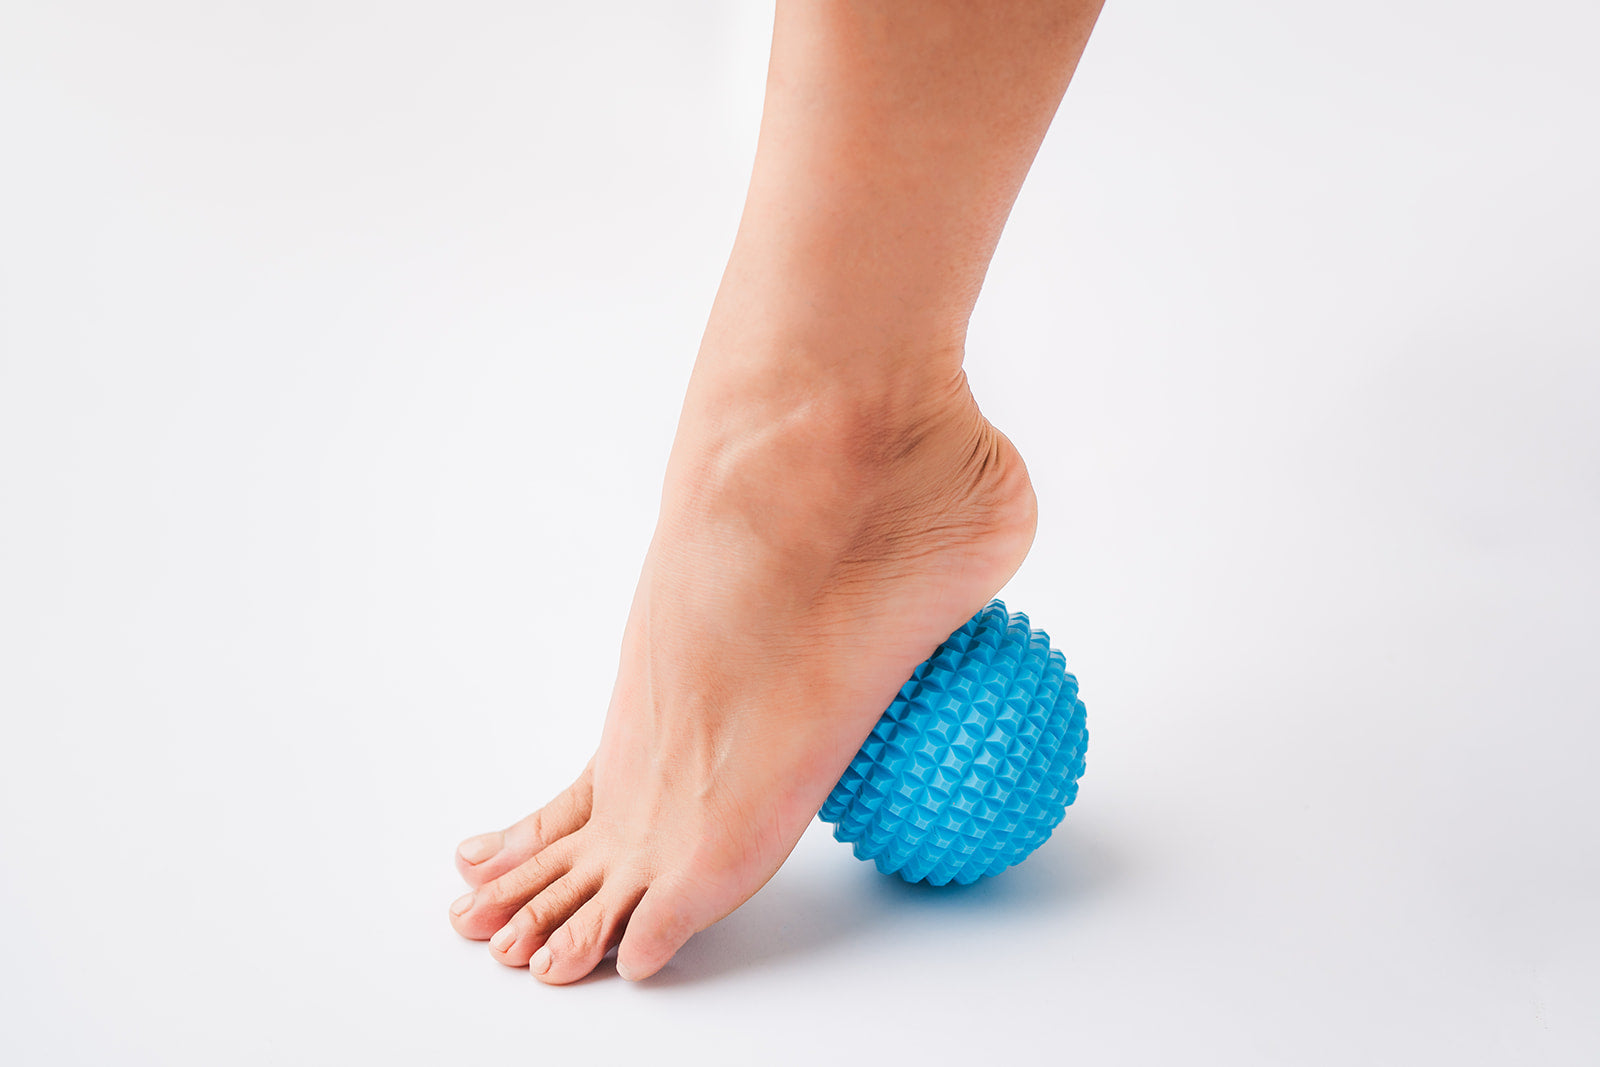 Kanjo Acupressure Foot Pain Relief Mat